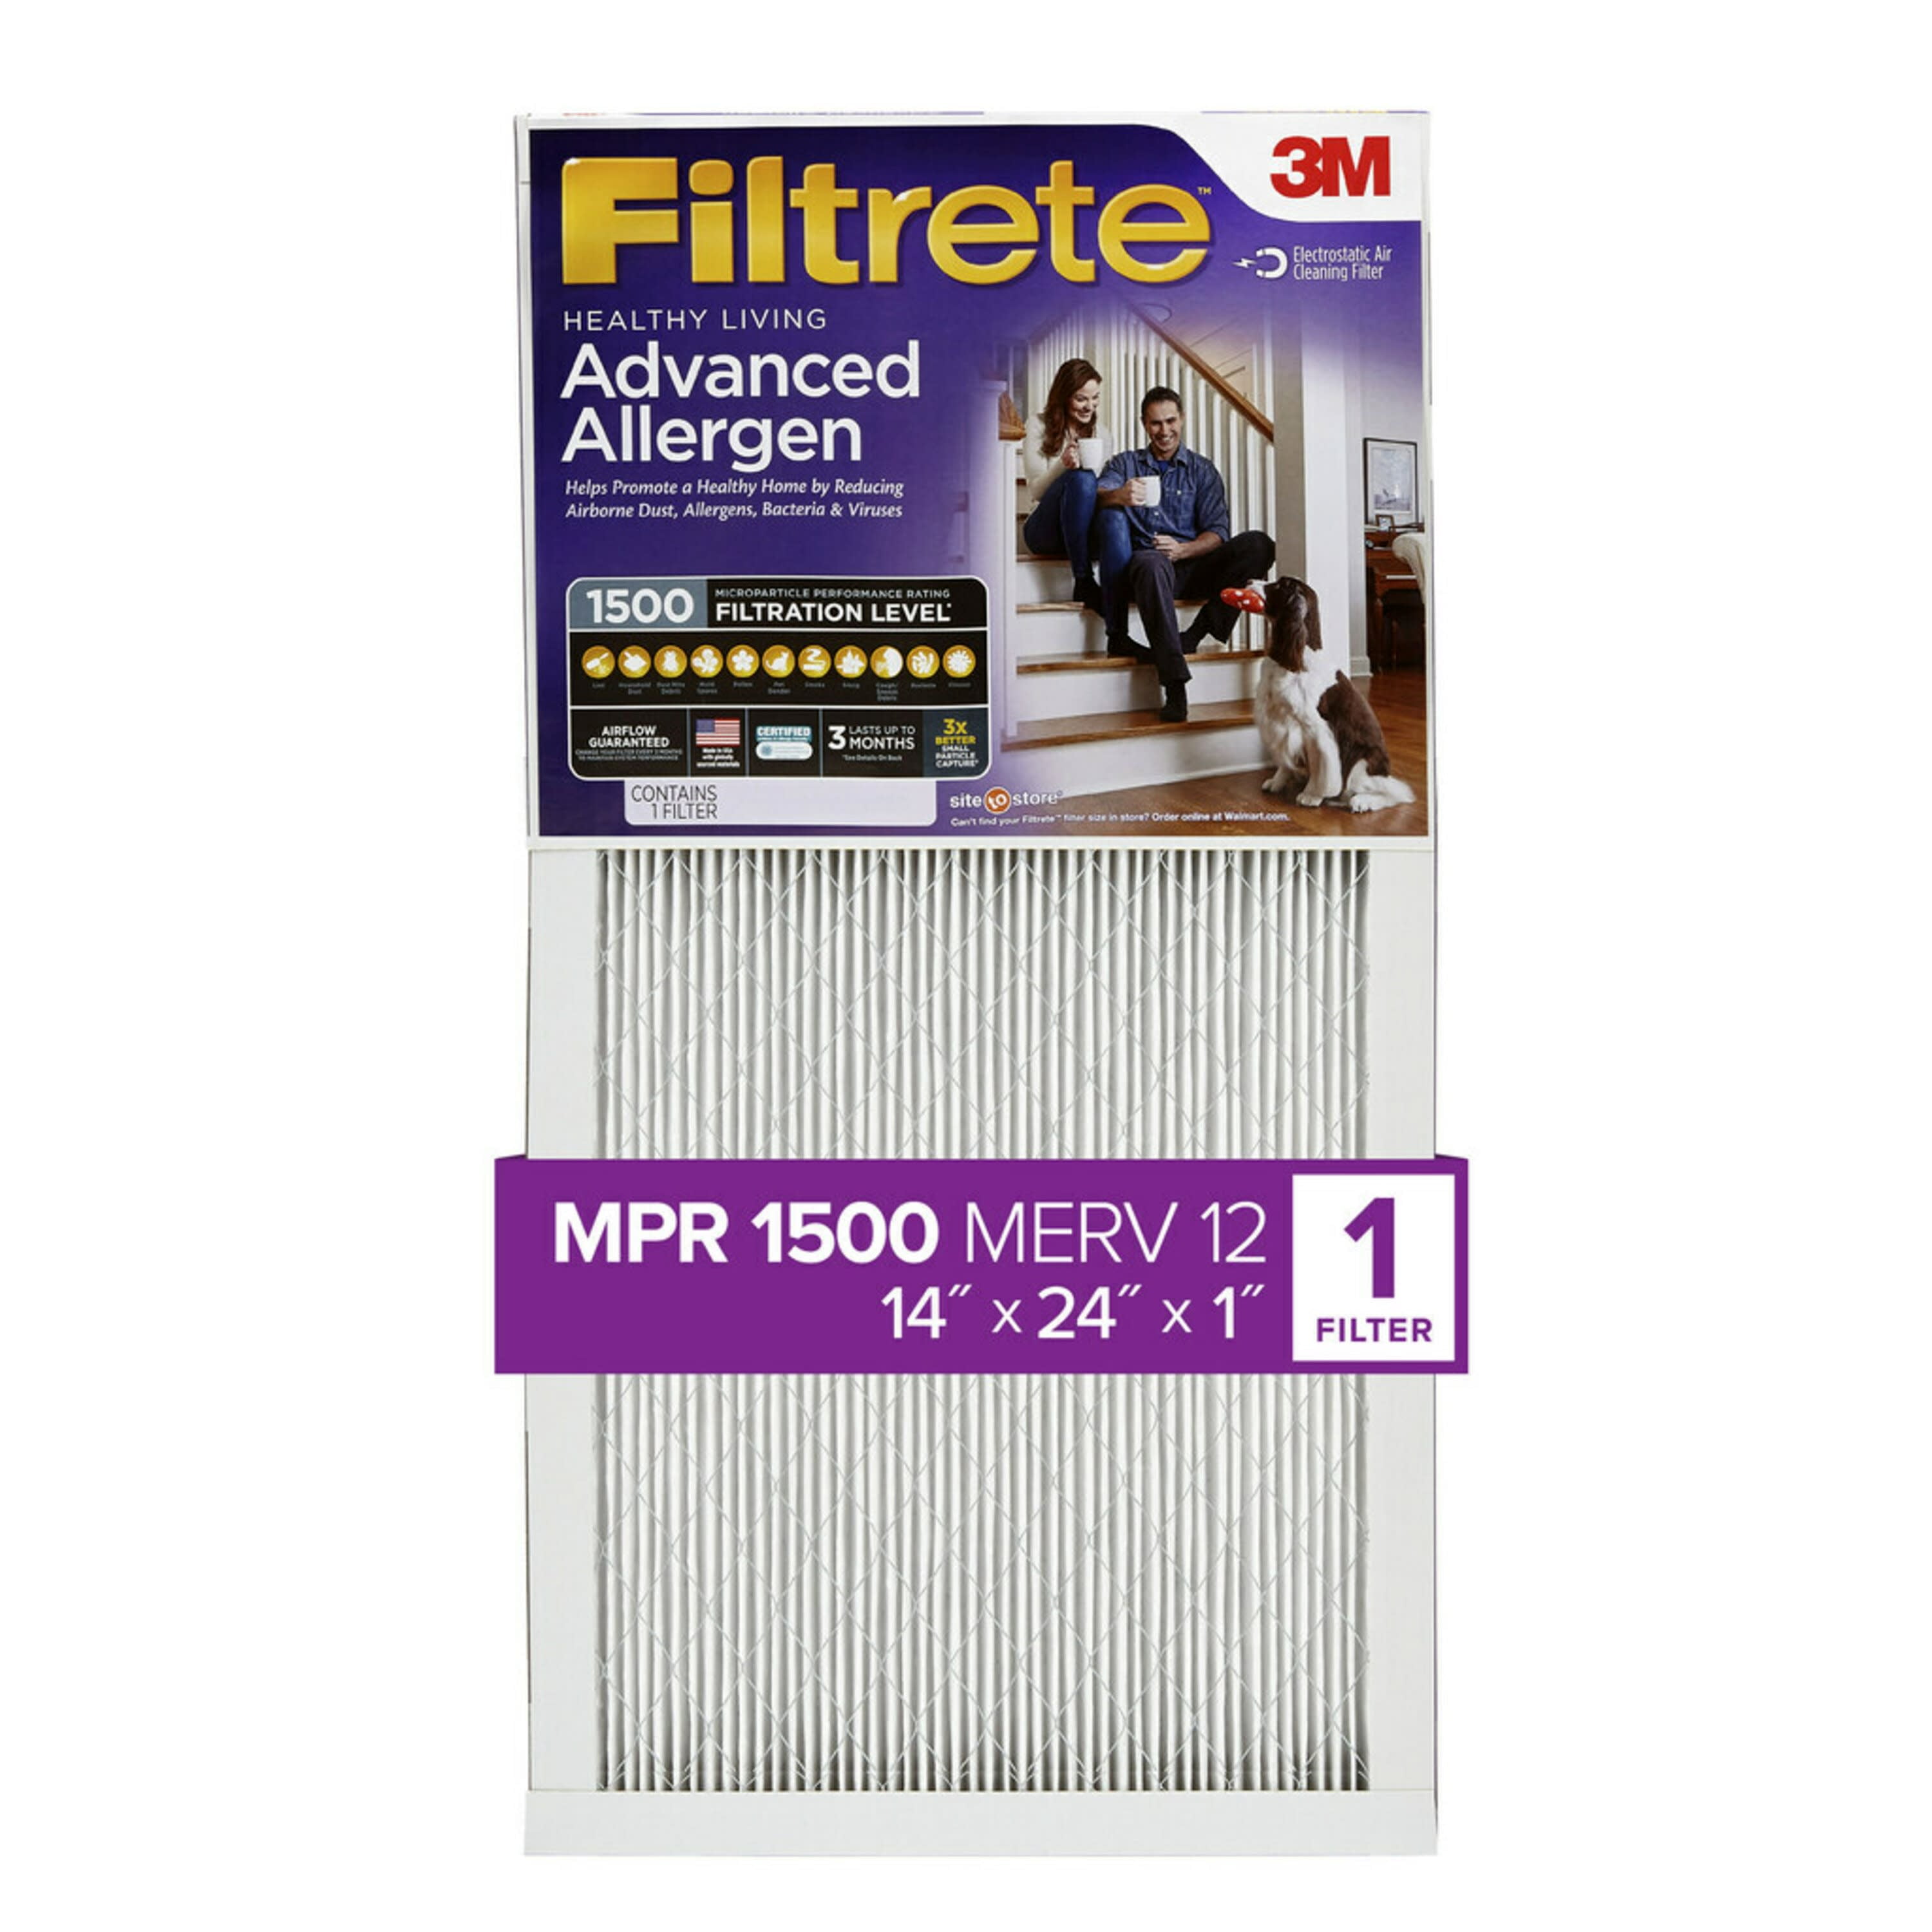 Filtrete by 3M, 14x24x1, MERV 12, Advanced Allergen Reduction HVAC Furnace Air Filter, Captures Allergens, Bacteria, Viruses, 1500 MPR, 1 Filter